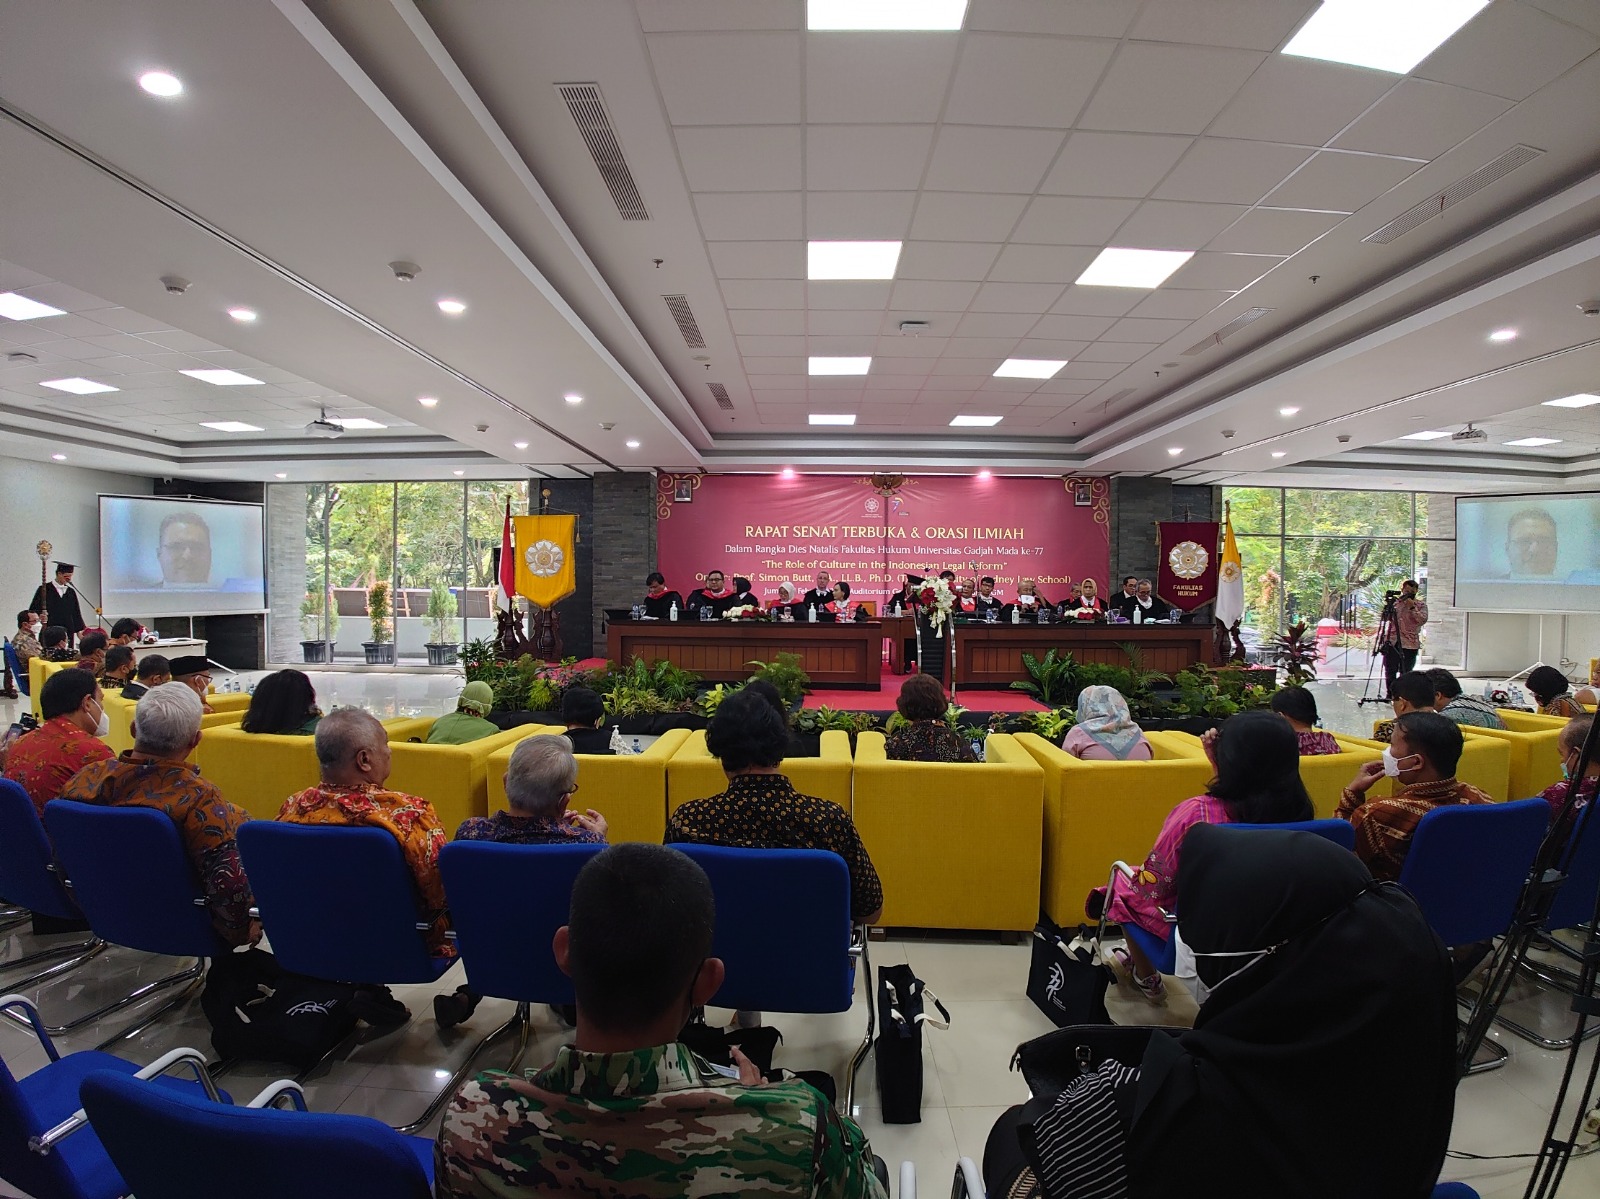 Ketua Pengadilan Negeri Yogyakarta Menghadiri Rapat Senat Terbuka dan Orasi Ilmiah Fakultas Hukum Universitas Gadjah Mada